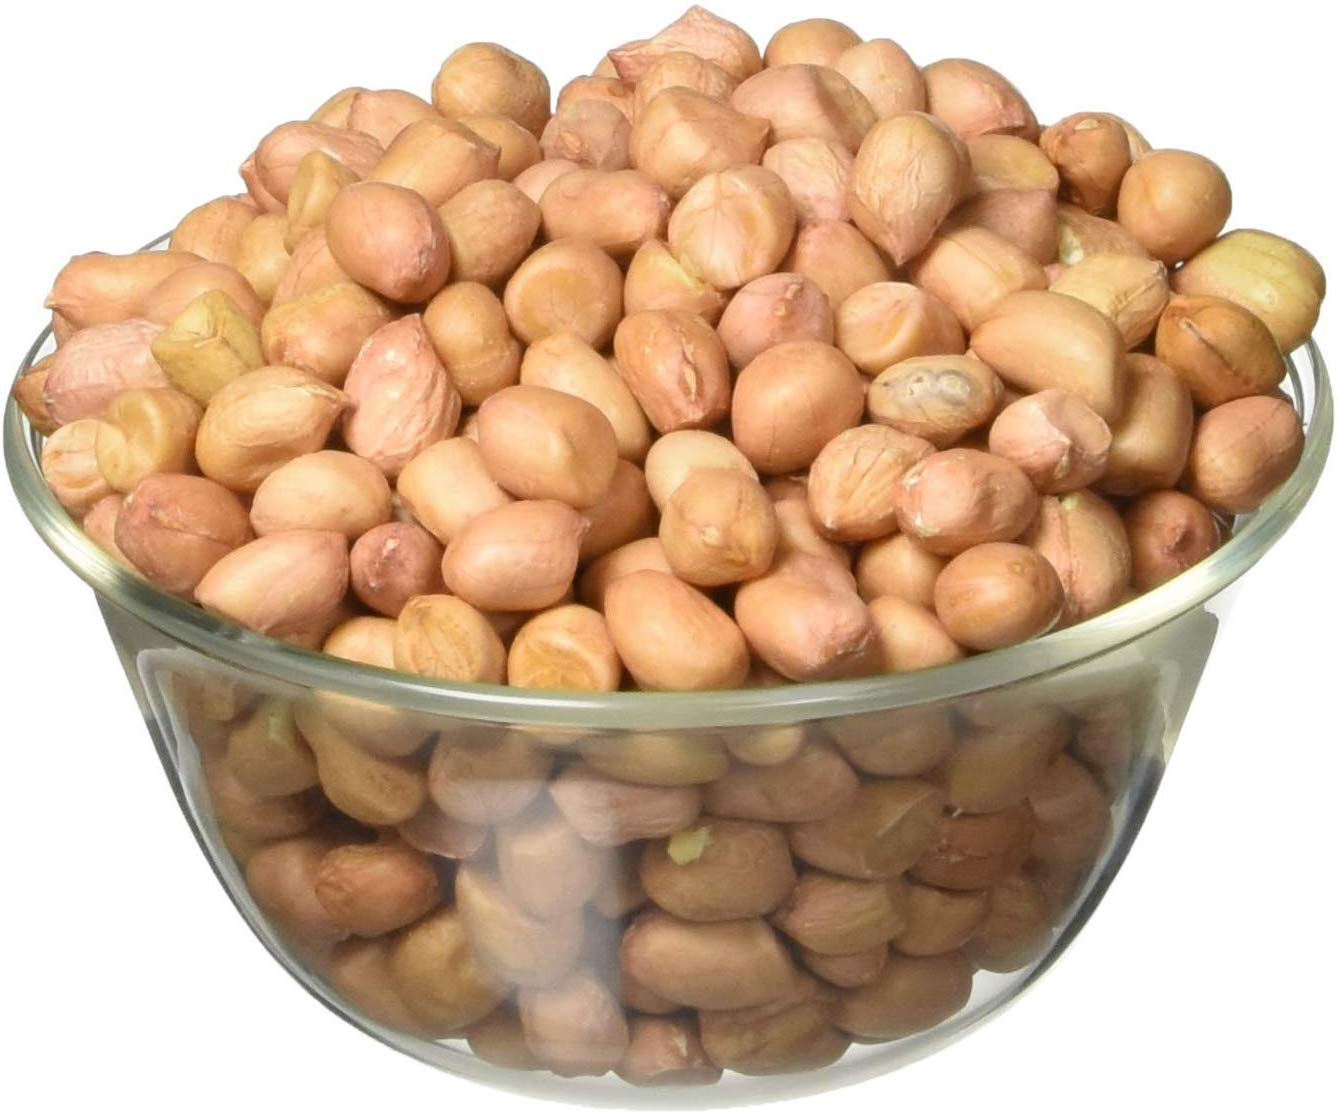 Peanuts Raw/ Verusenaga/ Pallilu/Ground Nut